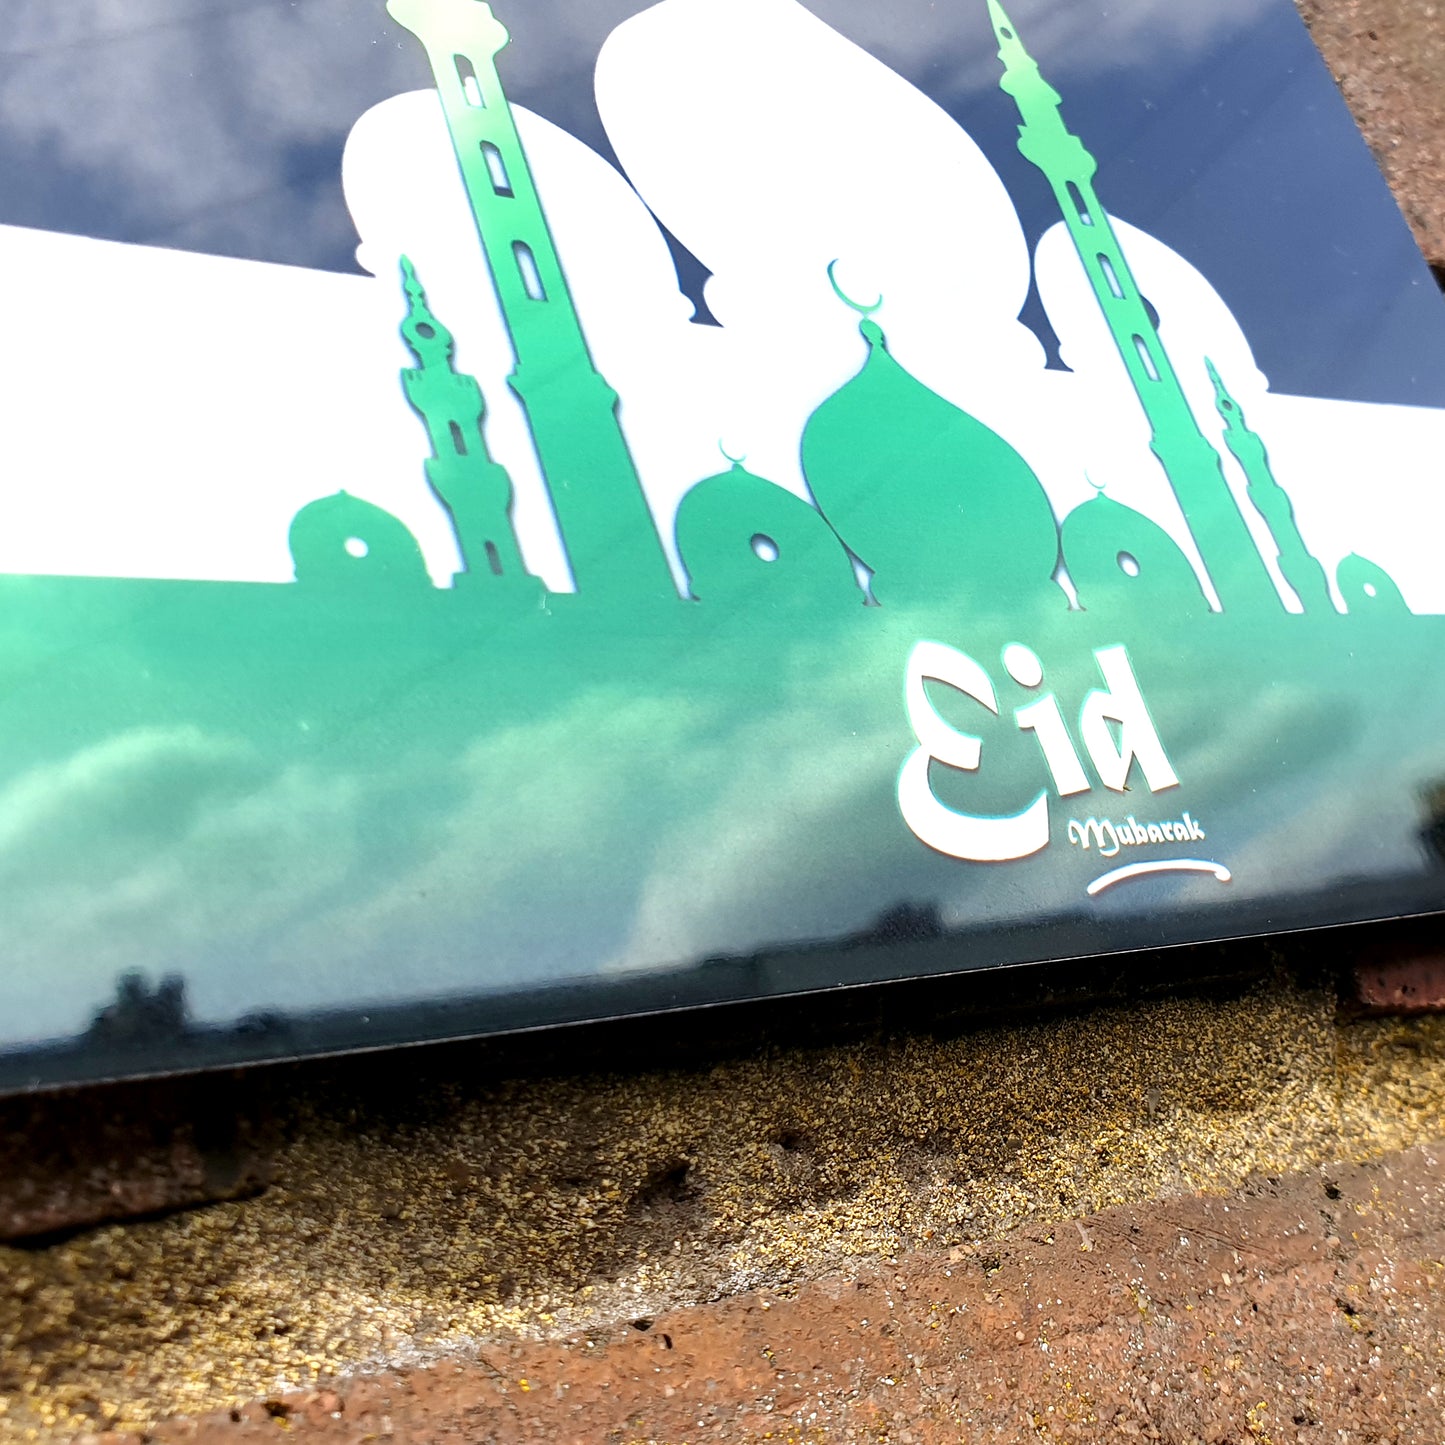 Panneau métallique miroir Eid Mubarak, vert et miroir des mosquées